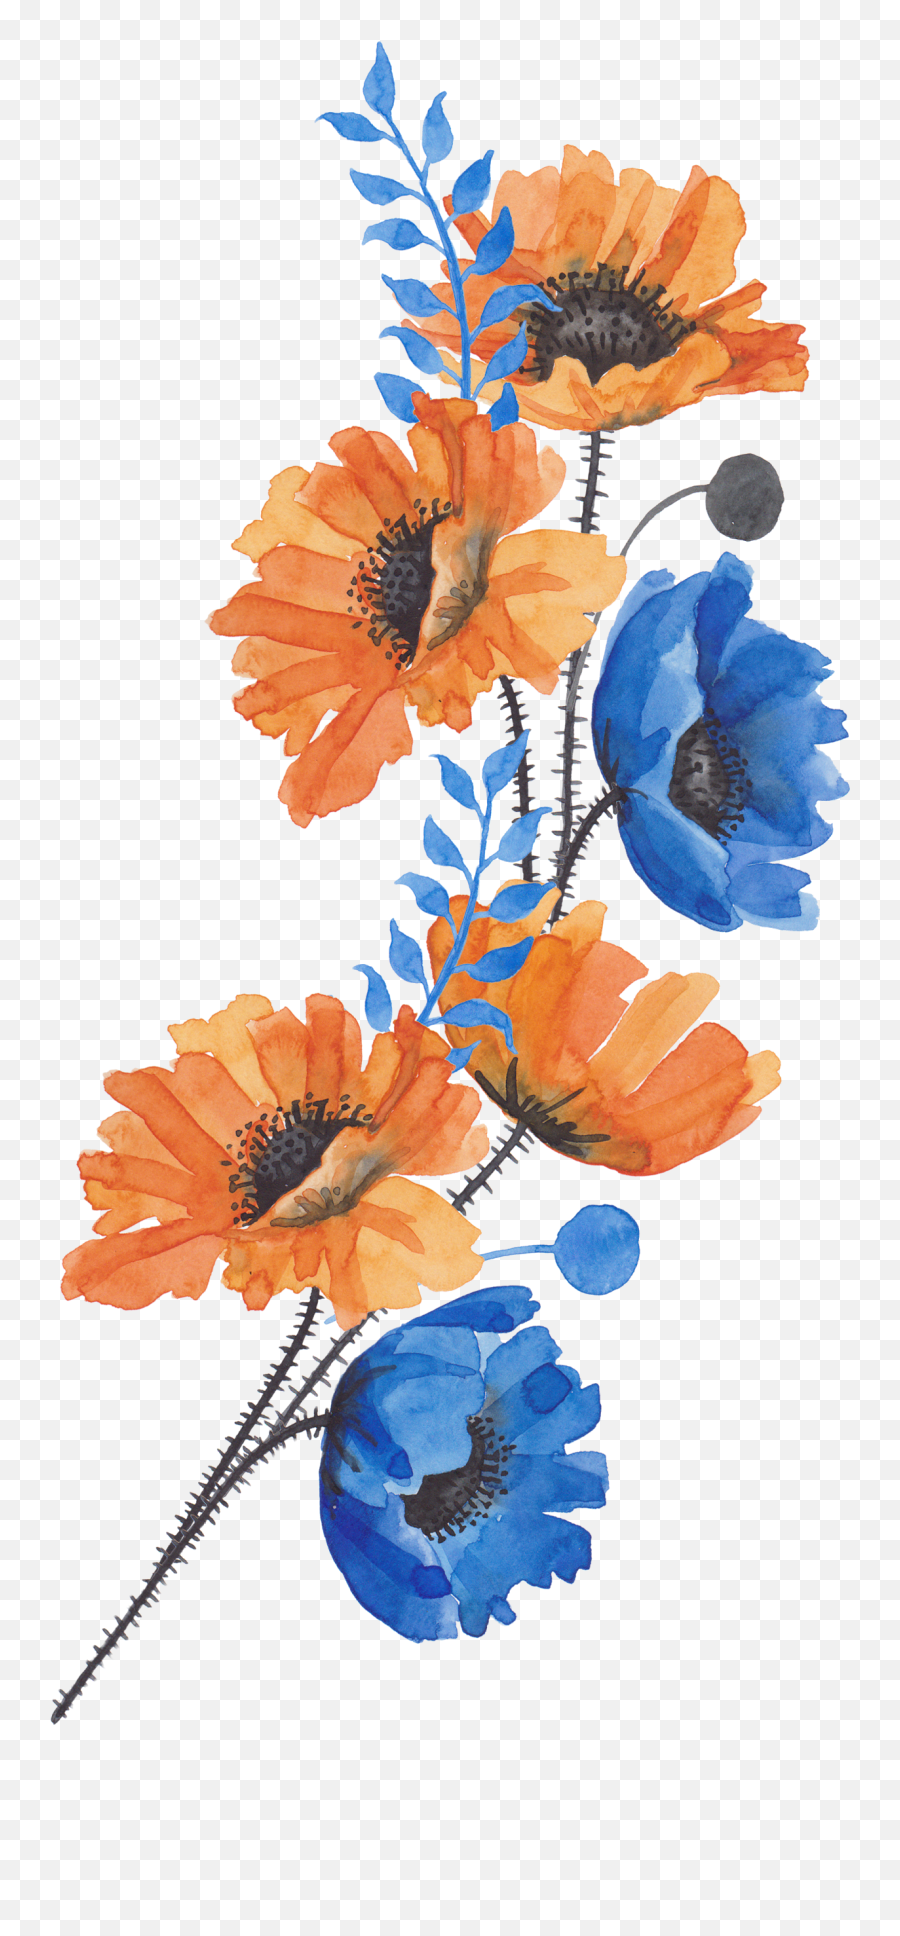 Bouquet Of Flowers - Transparent Image Of Bouquet Of Flower Blue And Orange Flower Png,Flower Bouquet Transparent Background